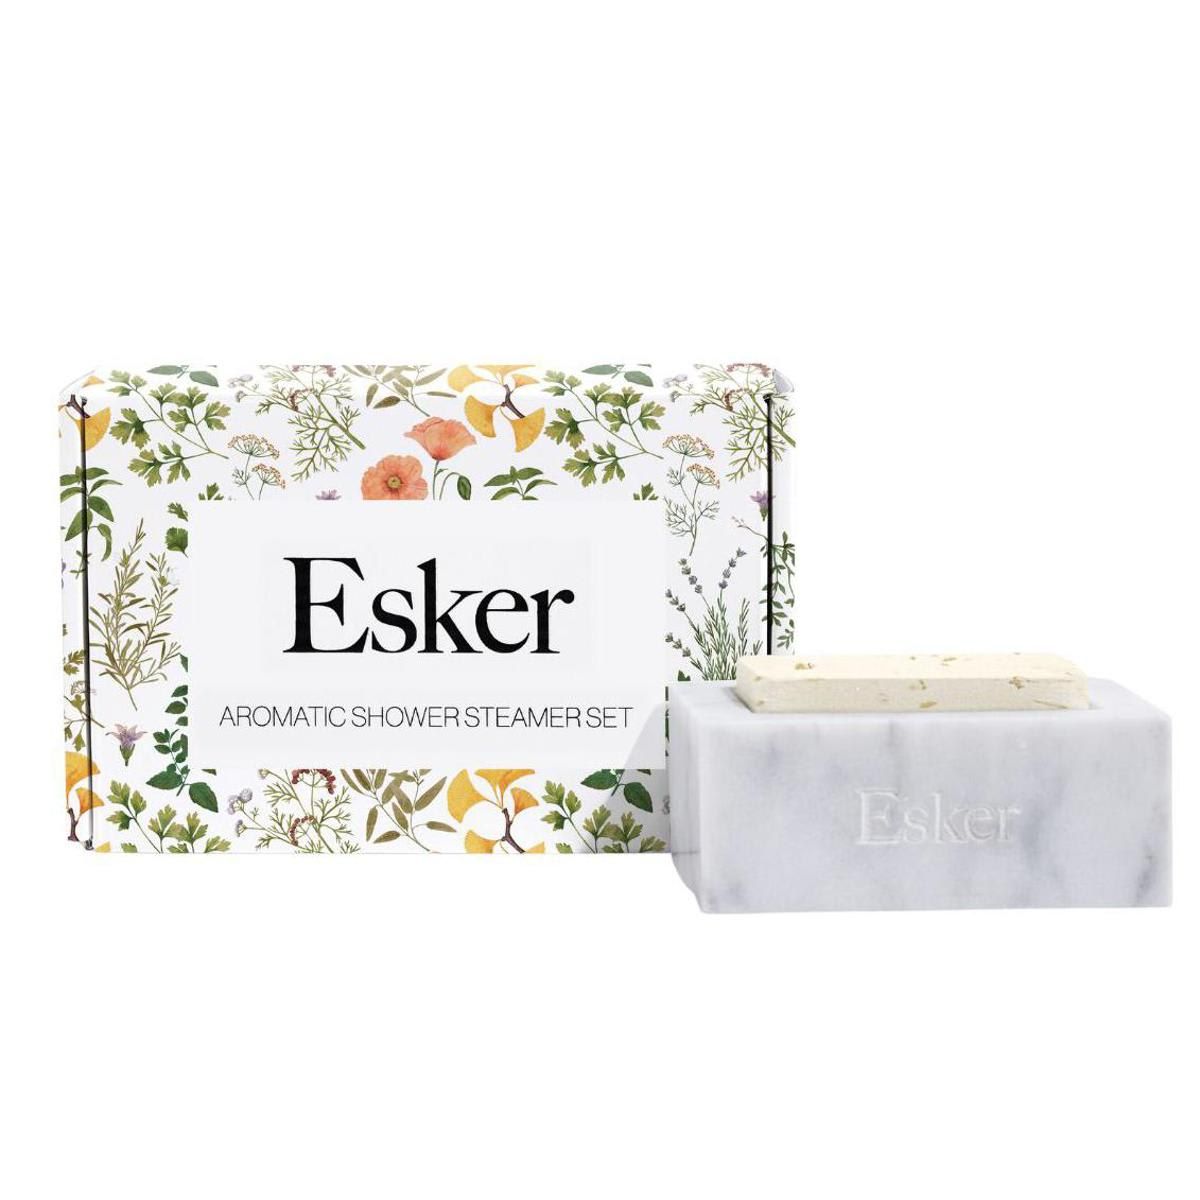 Esker Limited-Edition Aromatic Shower Steamer